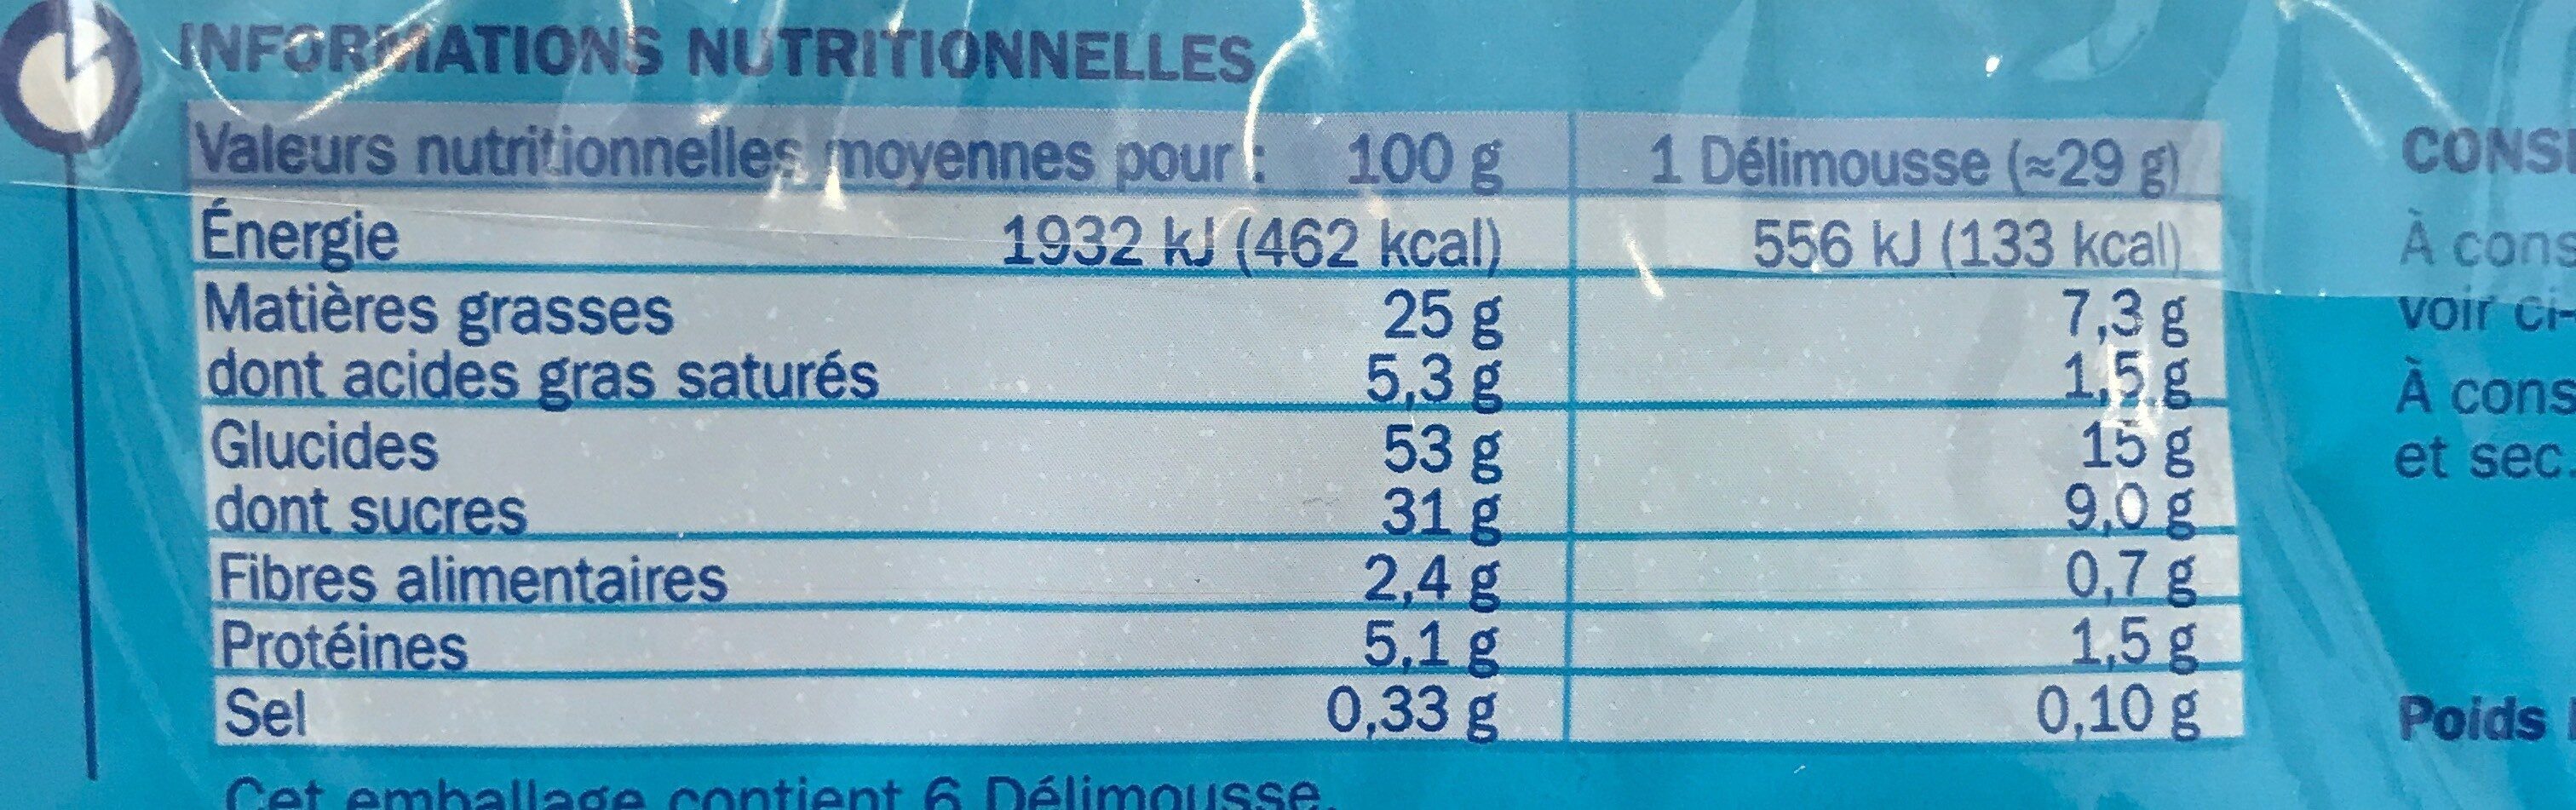 Goûters moelleux- delimousse- x 6 biscuits - Voedingswaarden - fr